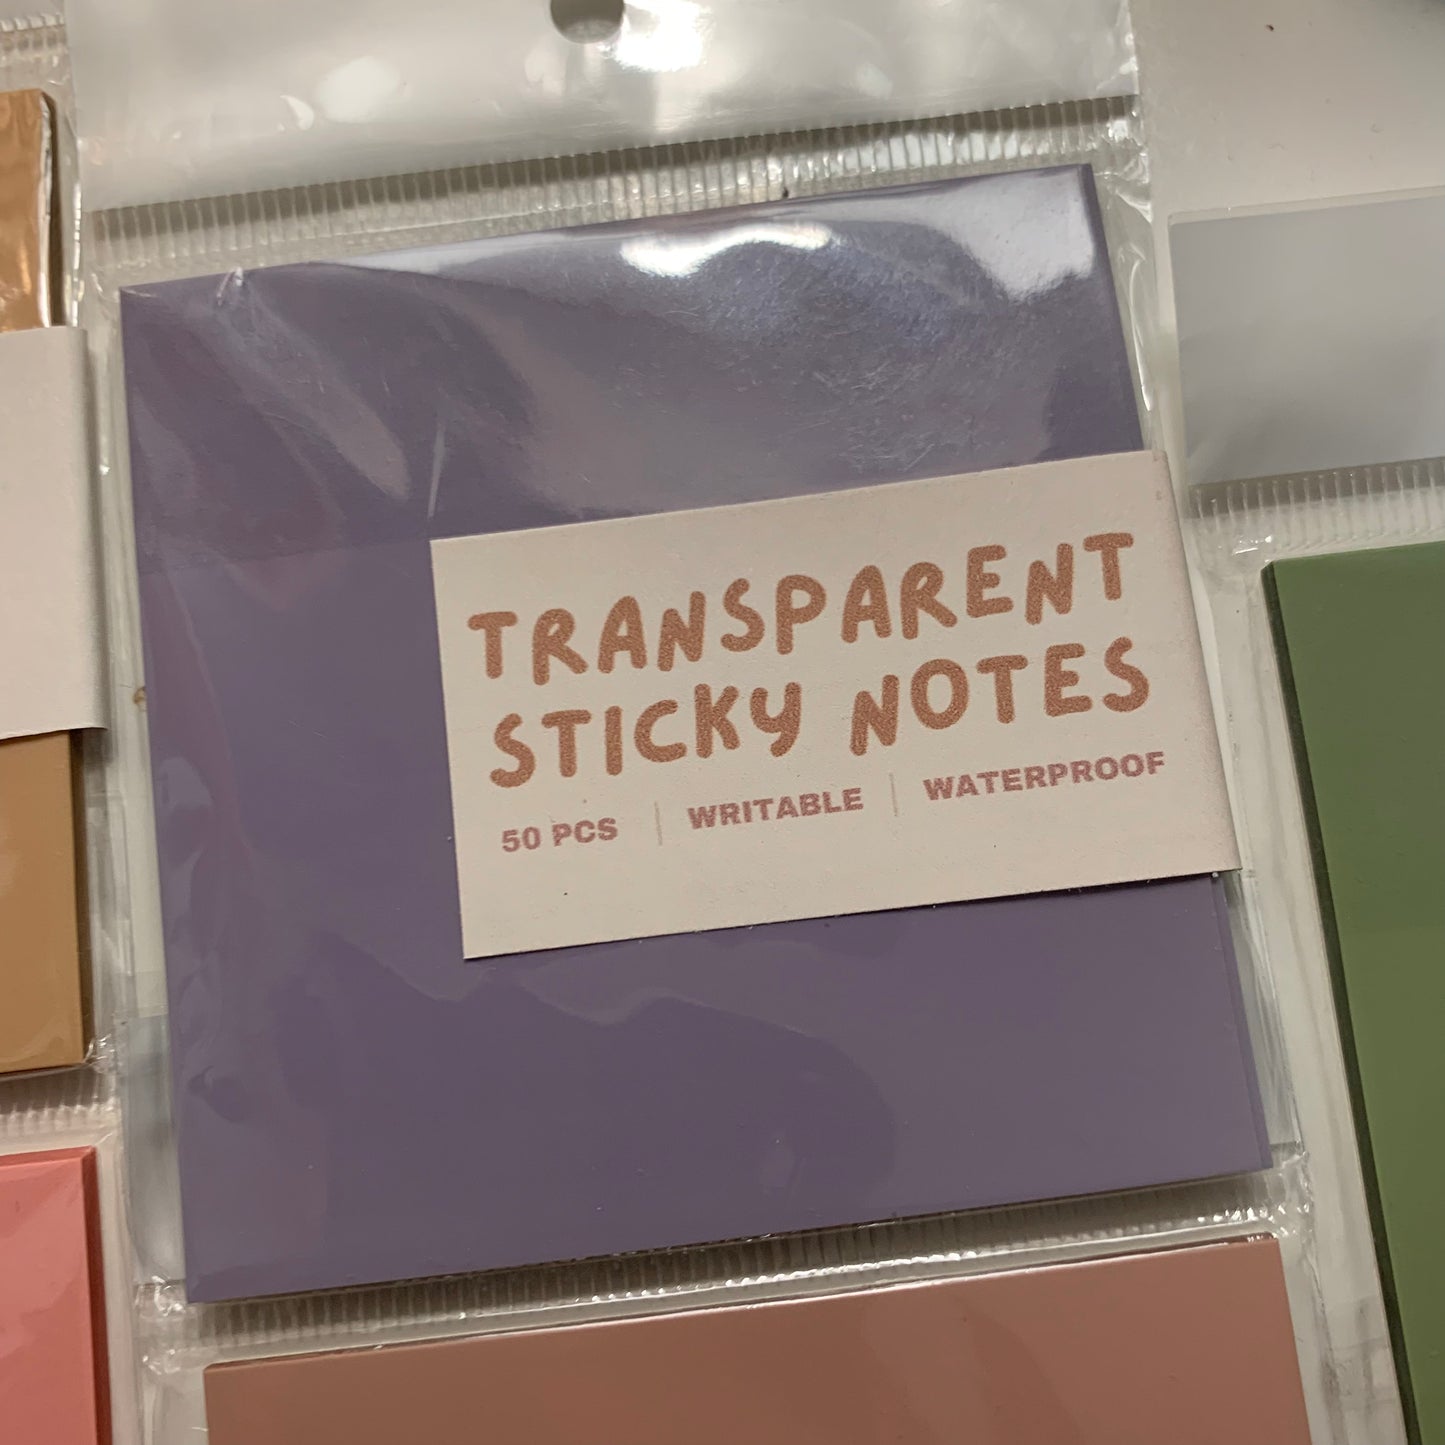 Transparent Sticky Notes - LILAC